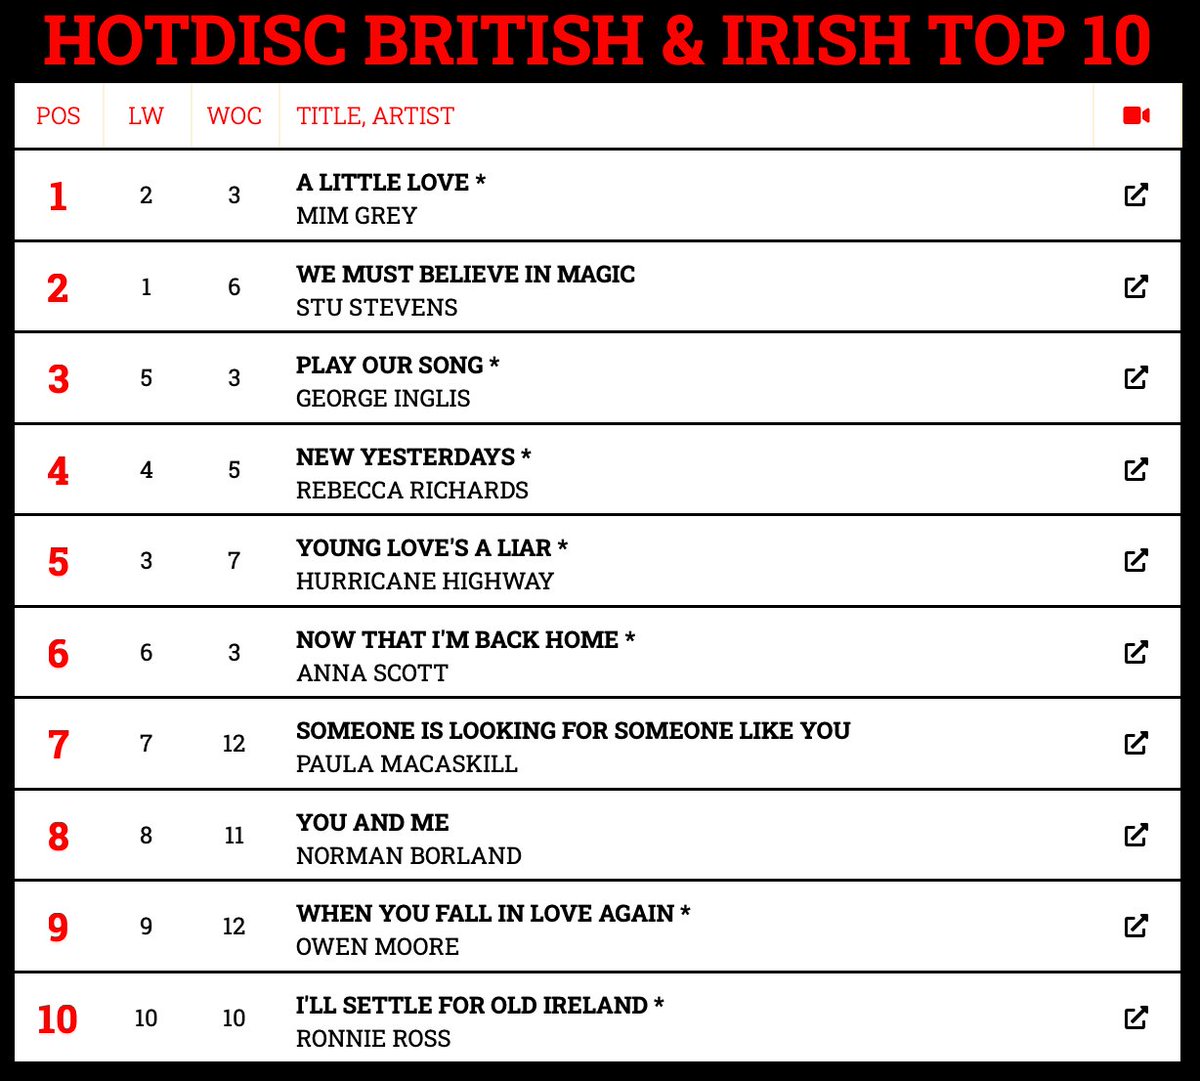 Hotdisc Top 10 British & Irish Chart - 18.2.24 @mimgrey @AllCountryRadio @foreverfbc @ScarletRiverPR @becmusician @BorlandNorman @OwenMooreSongs @MrRonnieRoss